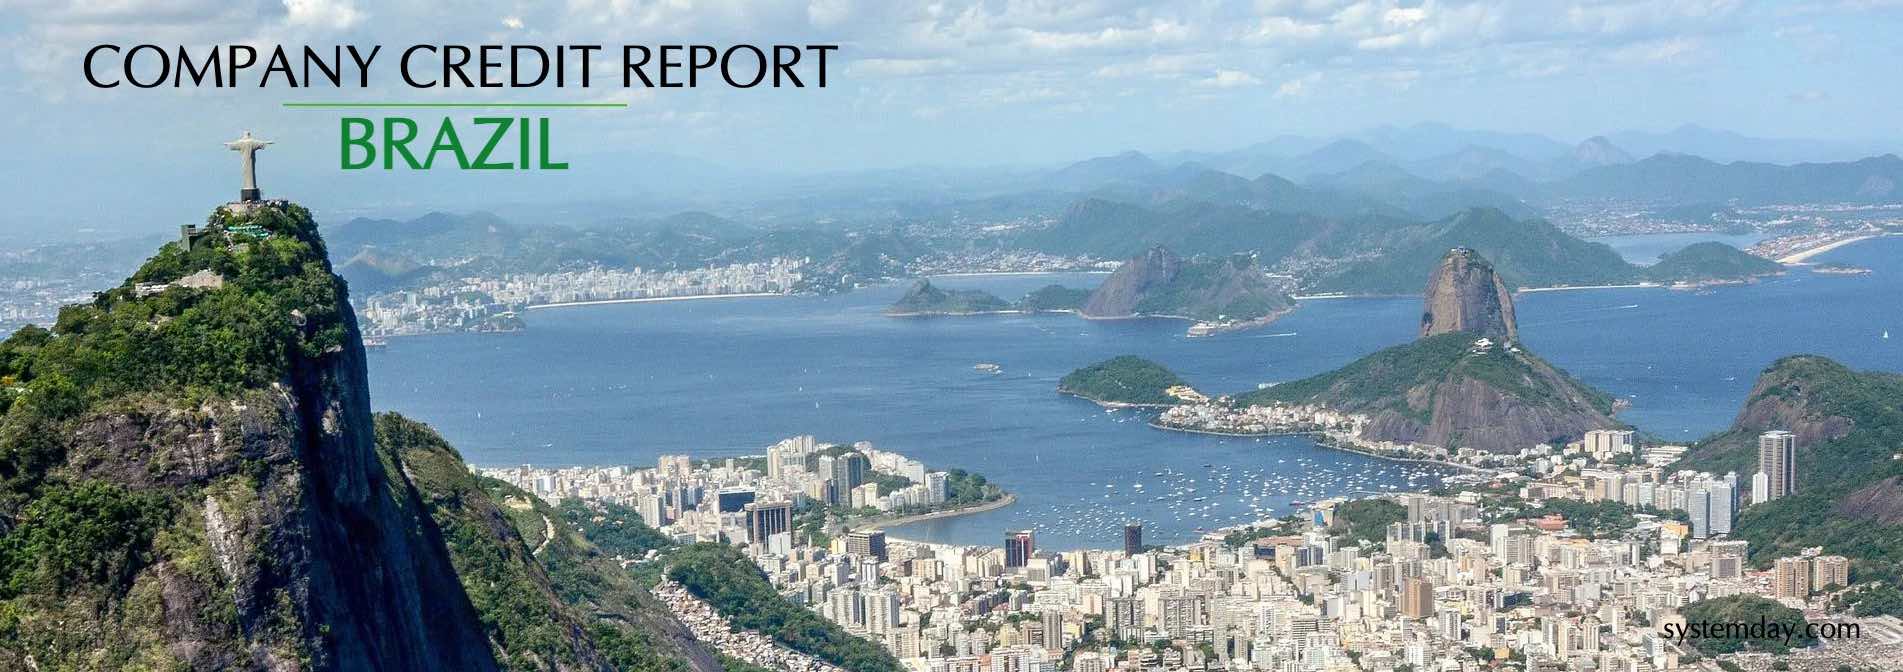 Brazil Company Credit Report